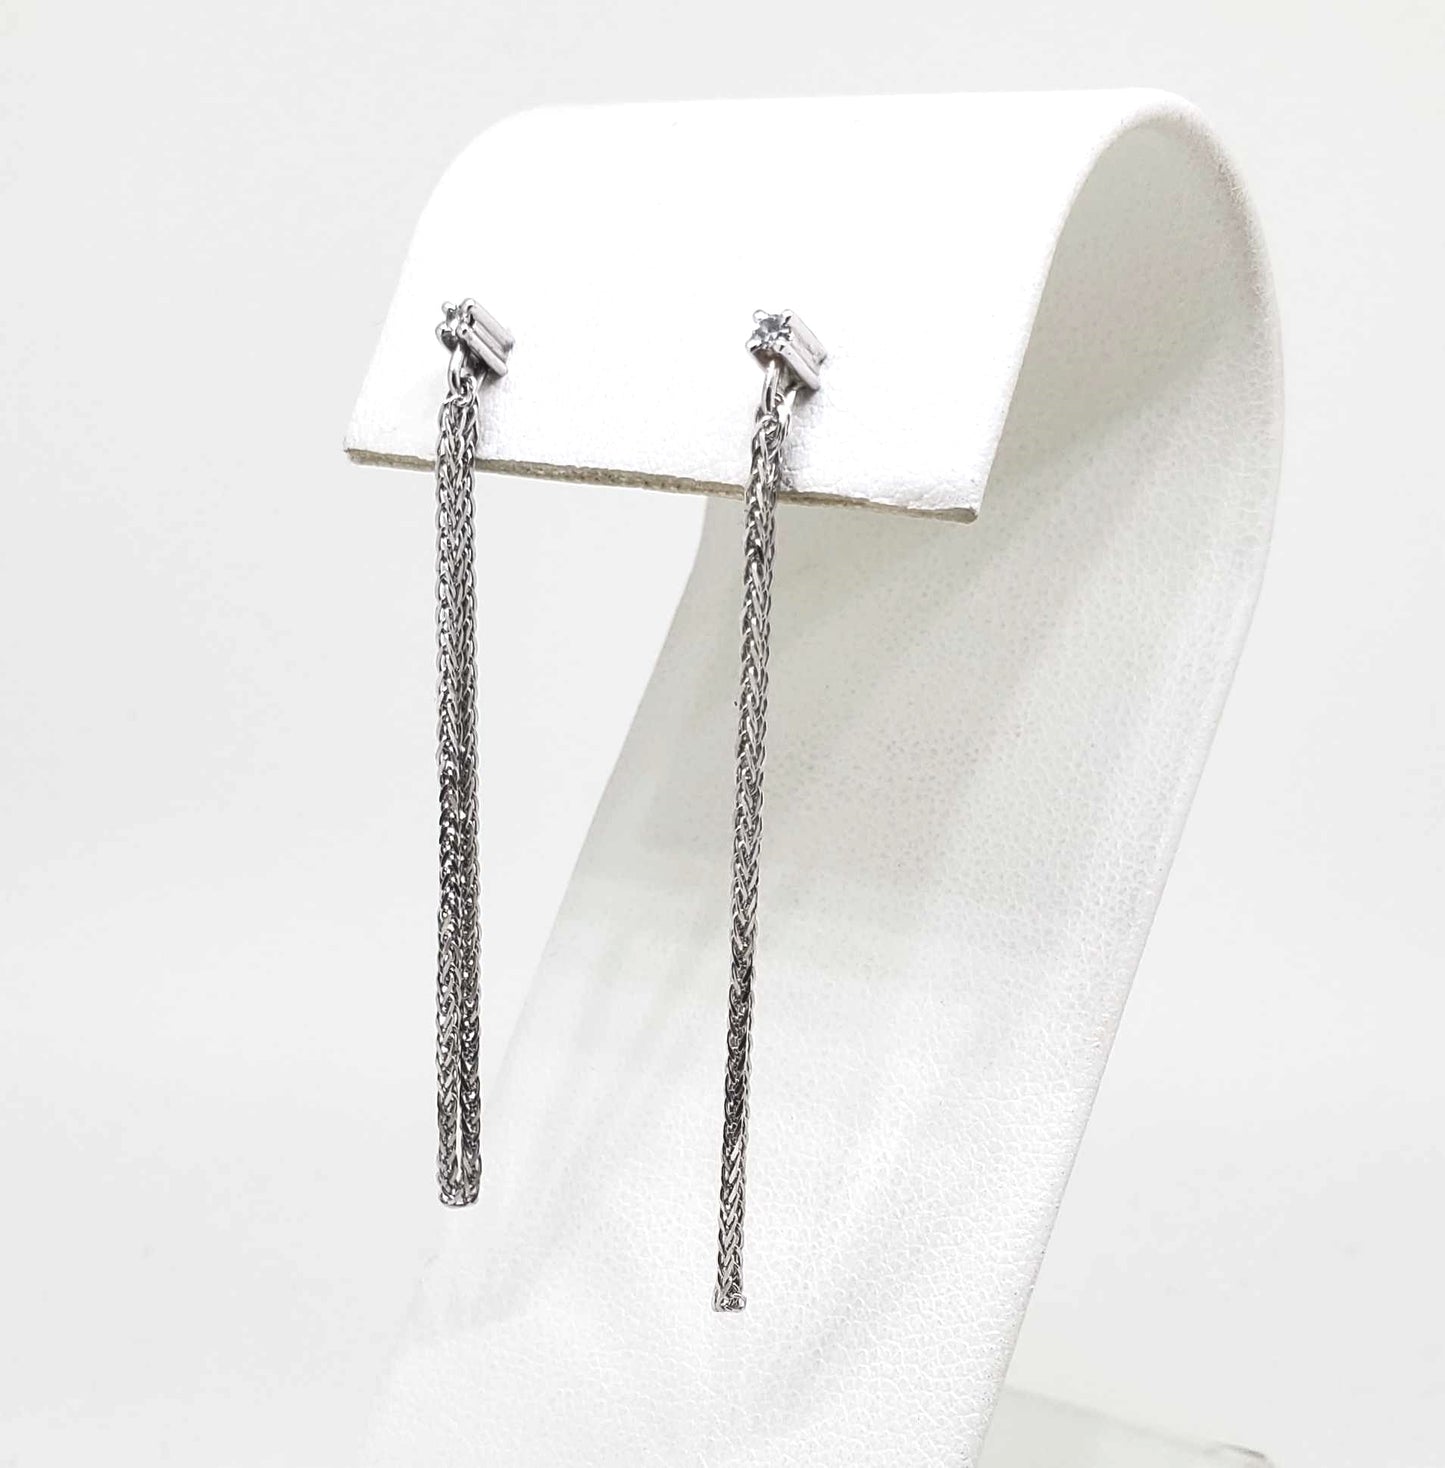 Vintage Diamond Stud Earrings with Spiga Chain Drop